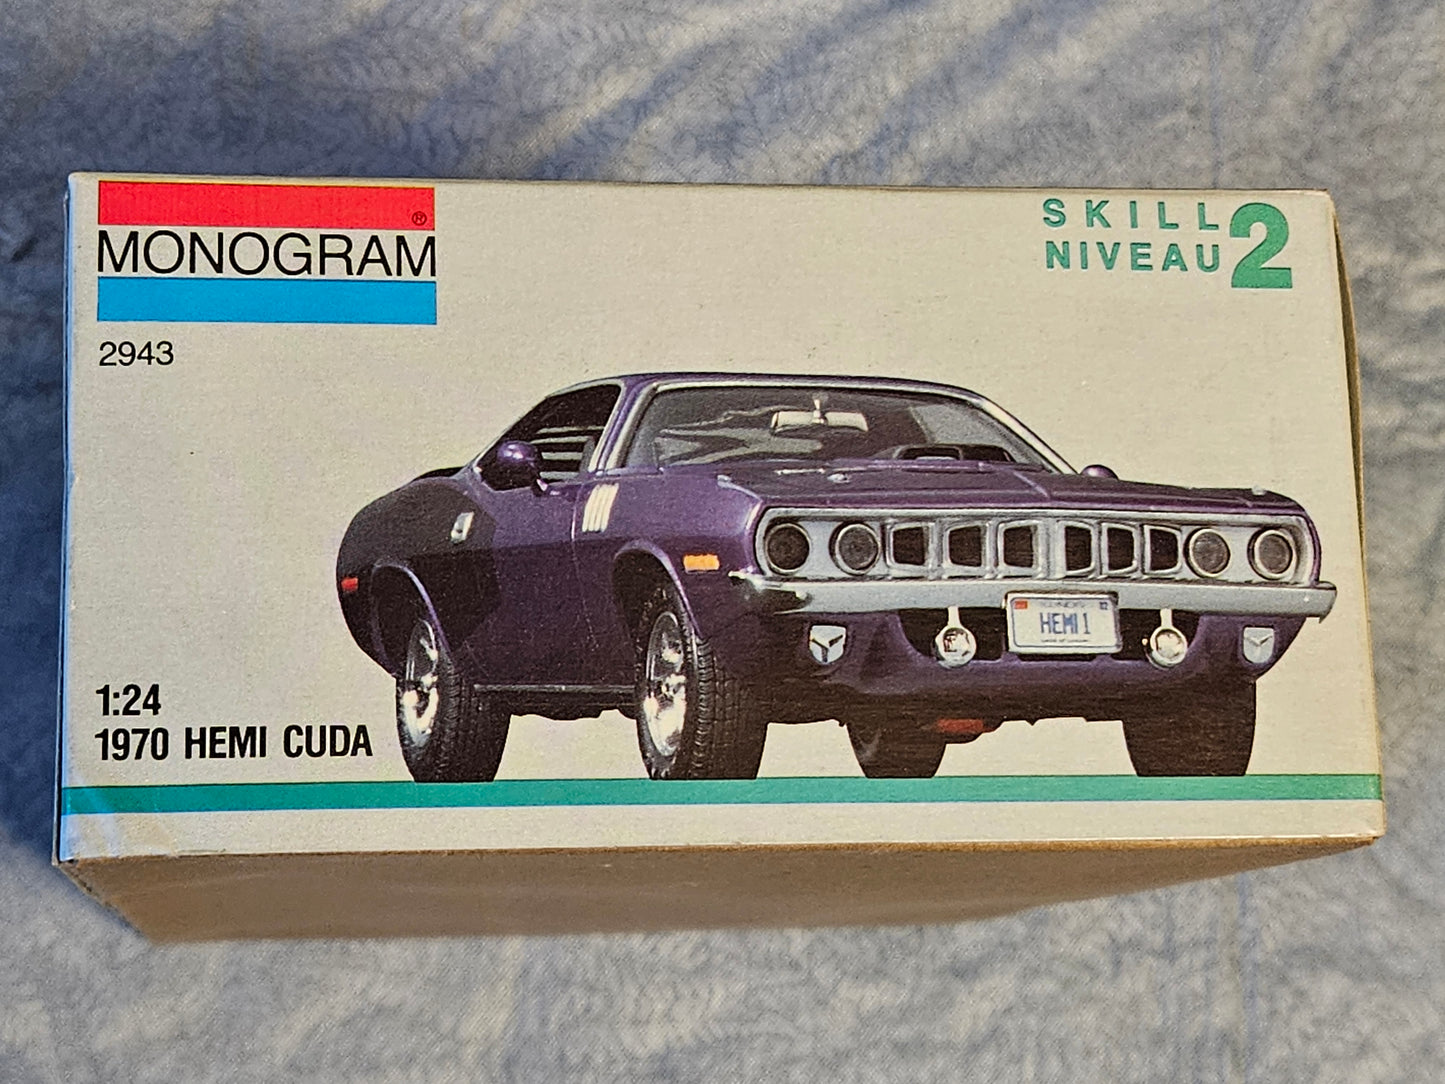 1970 Hemi Cuda Barracuda Monogram #2943 1:24 Open Box Model Kit